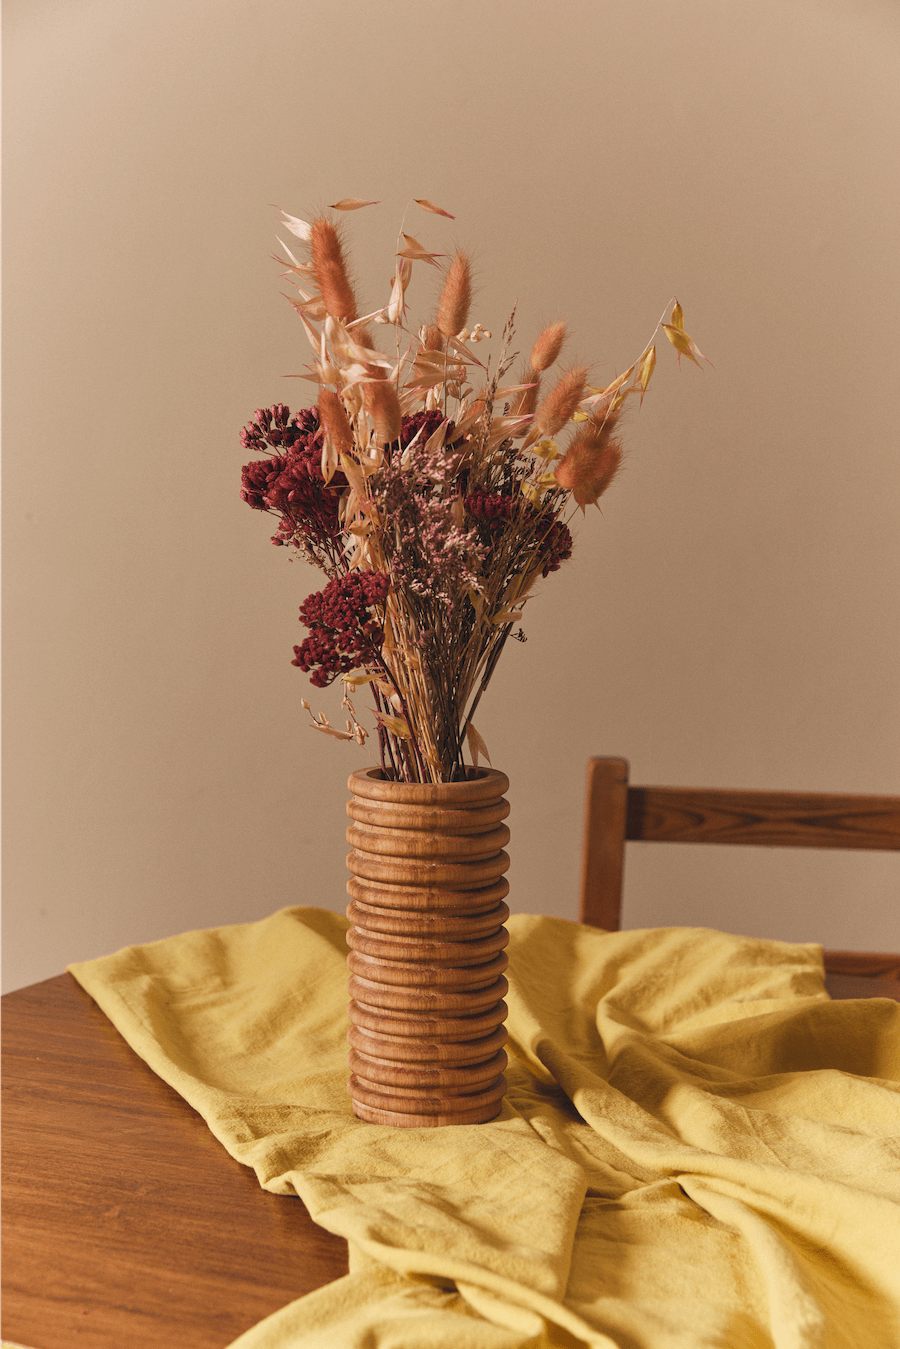 The Puffer Vase in Fireland Cherry